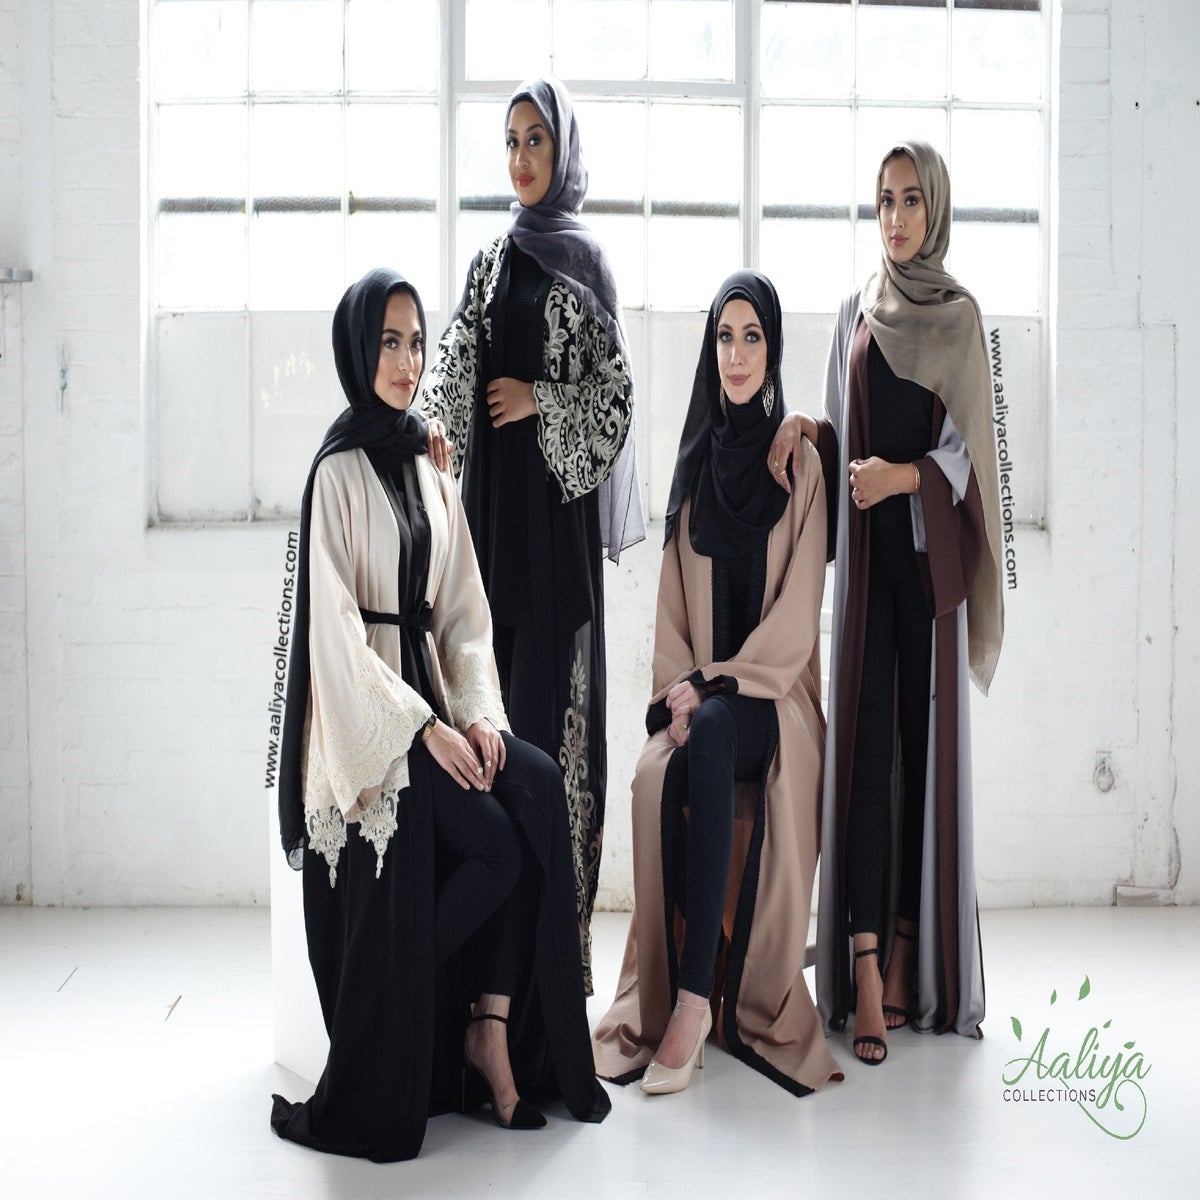 Aaliya Collections: Islamic Clothing, Abayas, Hijabs 